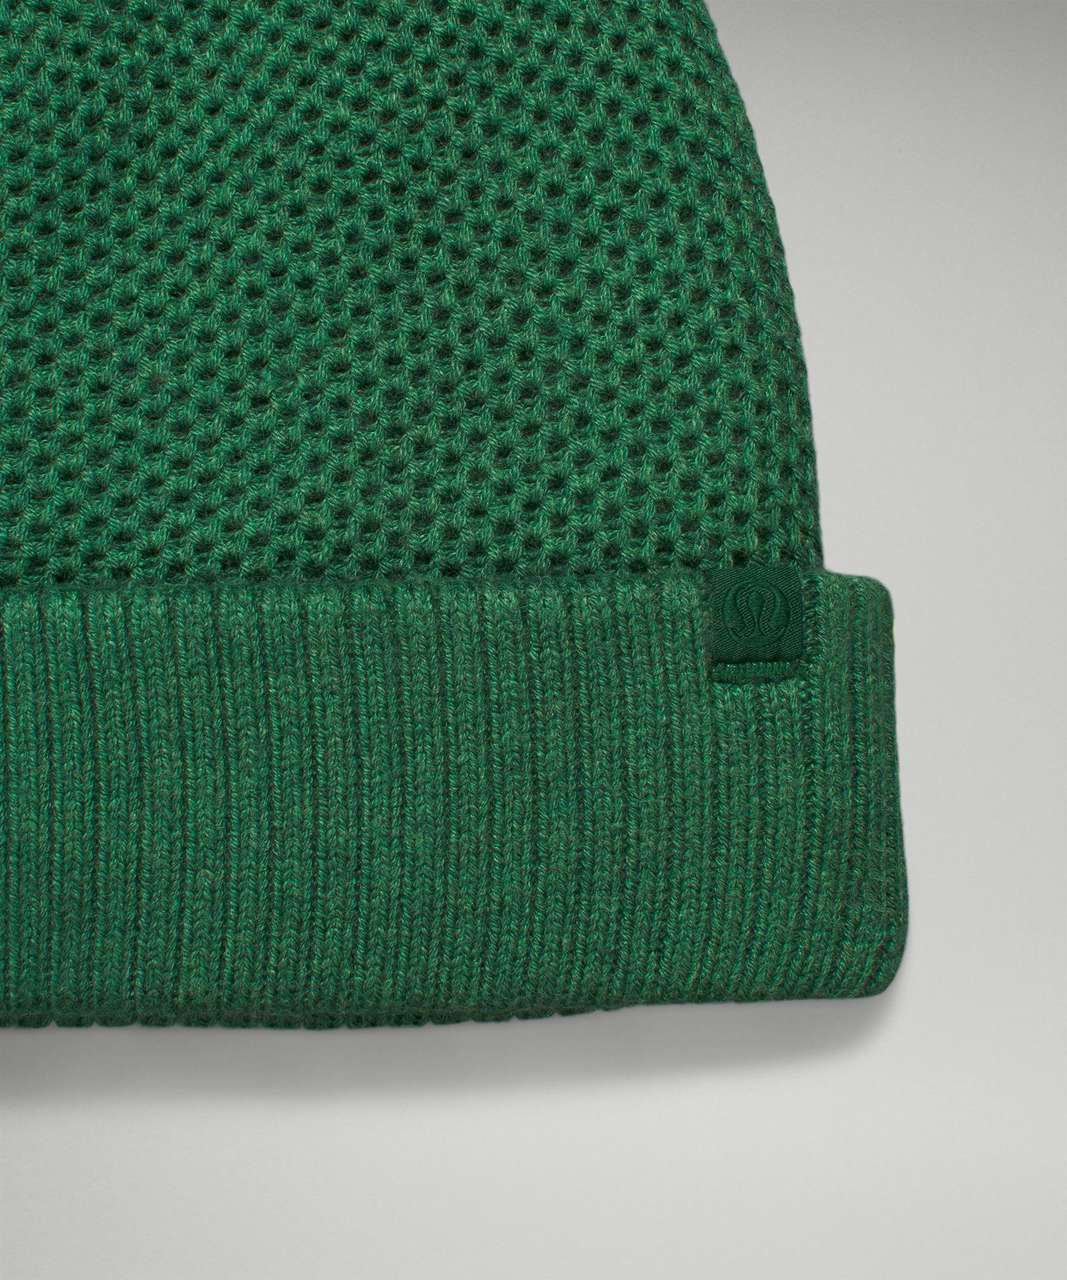 Lululemon Fleece-Lined Knit Beanie - Heathered Everglade Green